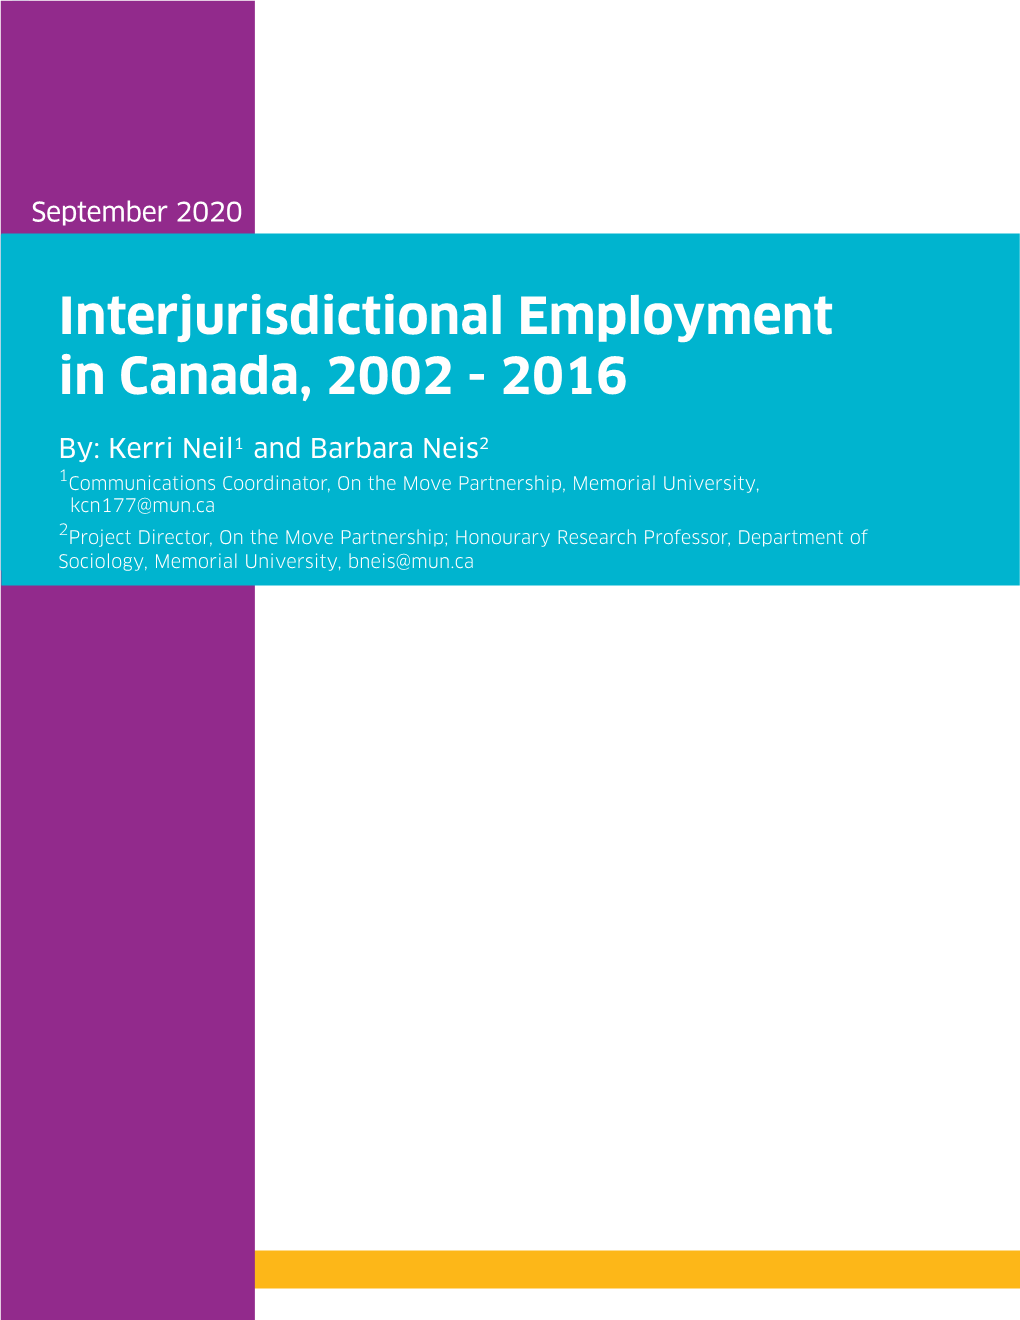 Interjurisdictional Employment in Canada, 2002 - 2016